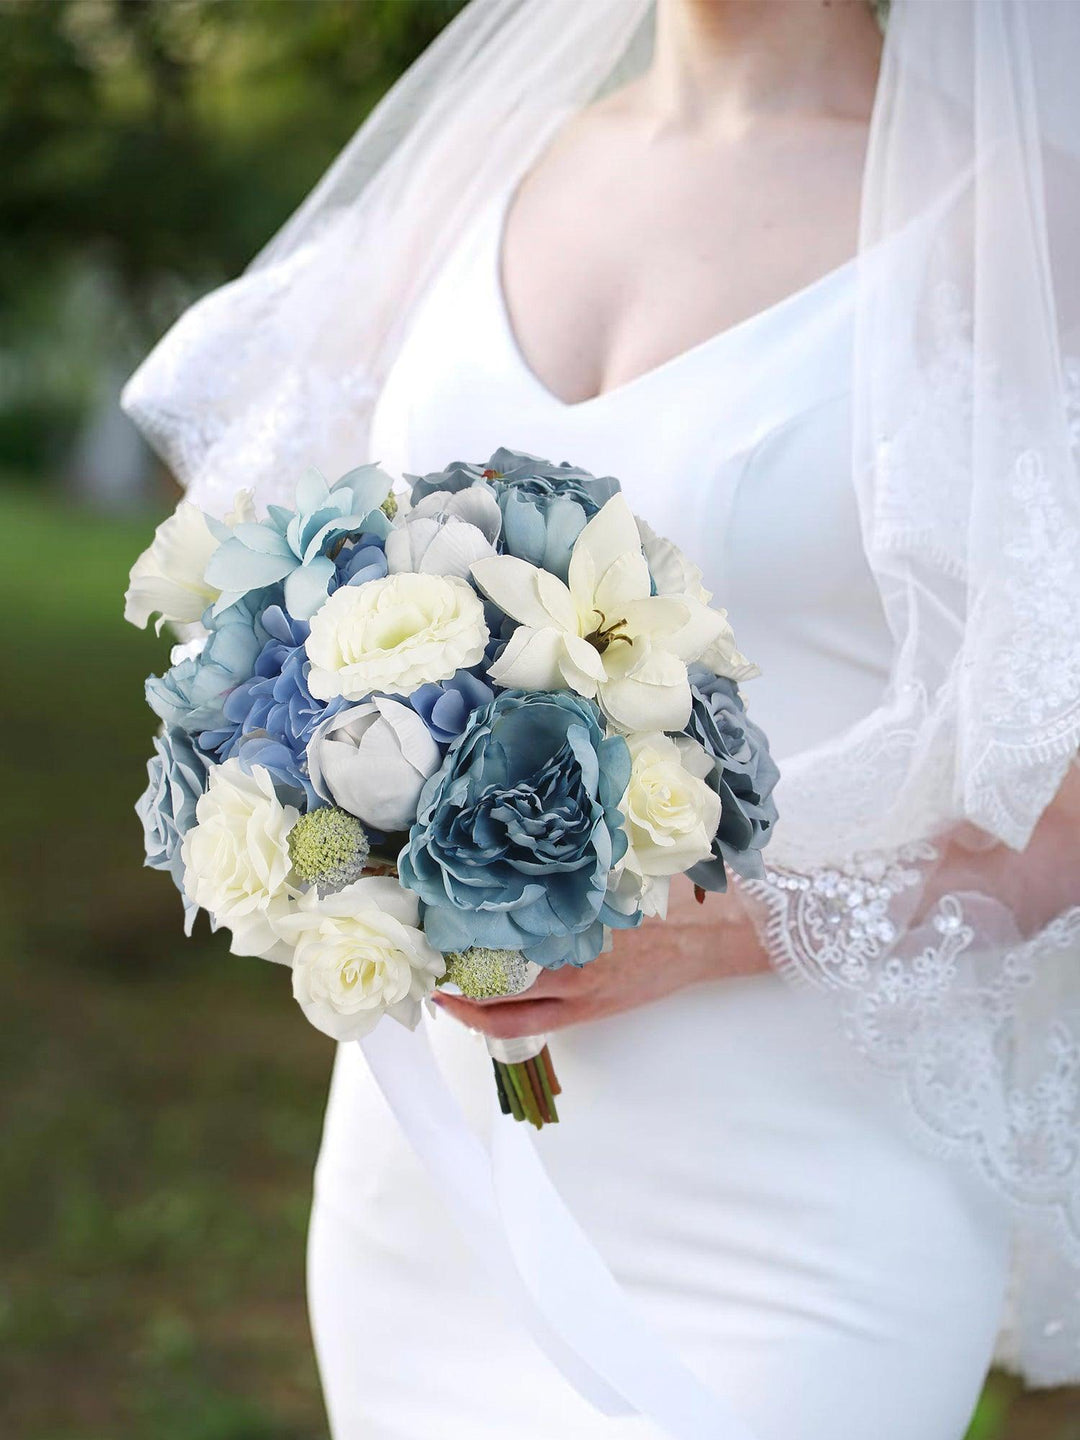 11 inch wide Dusty Blue Bridal Bouquet - Rinlong Flower